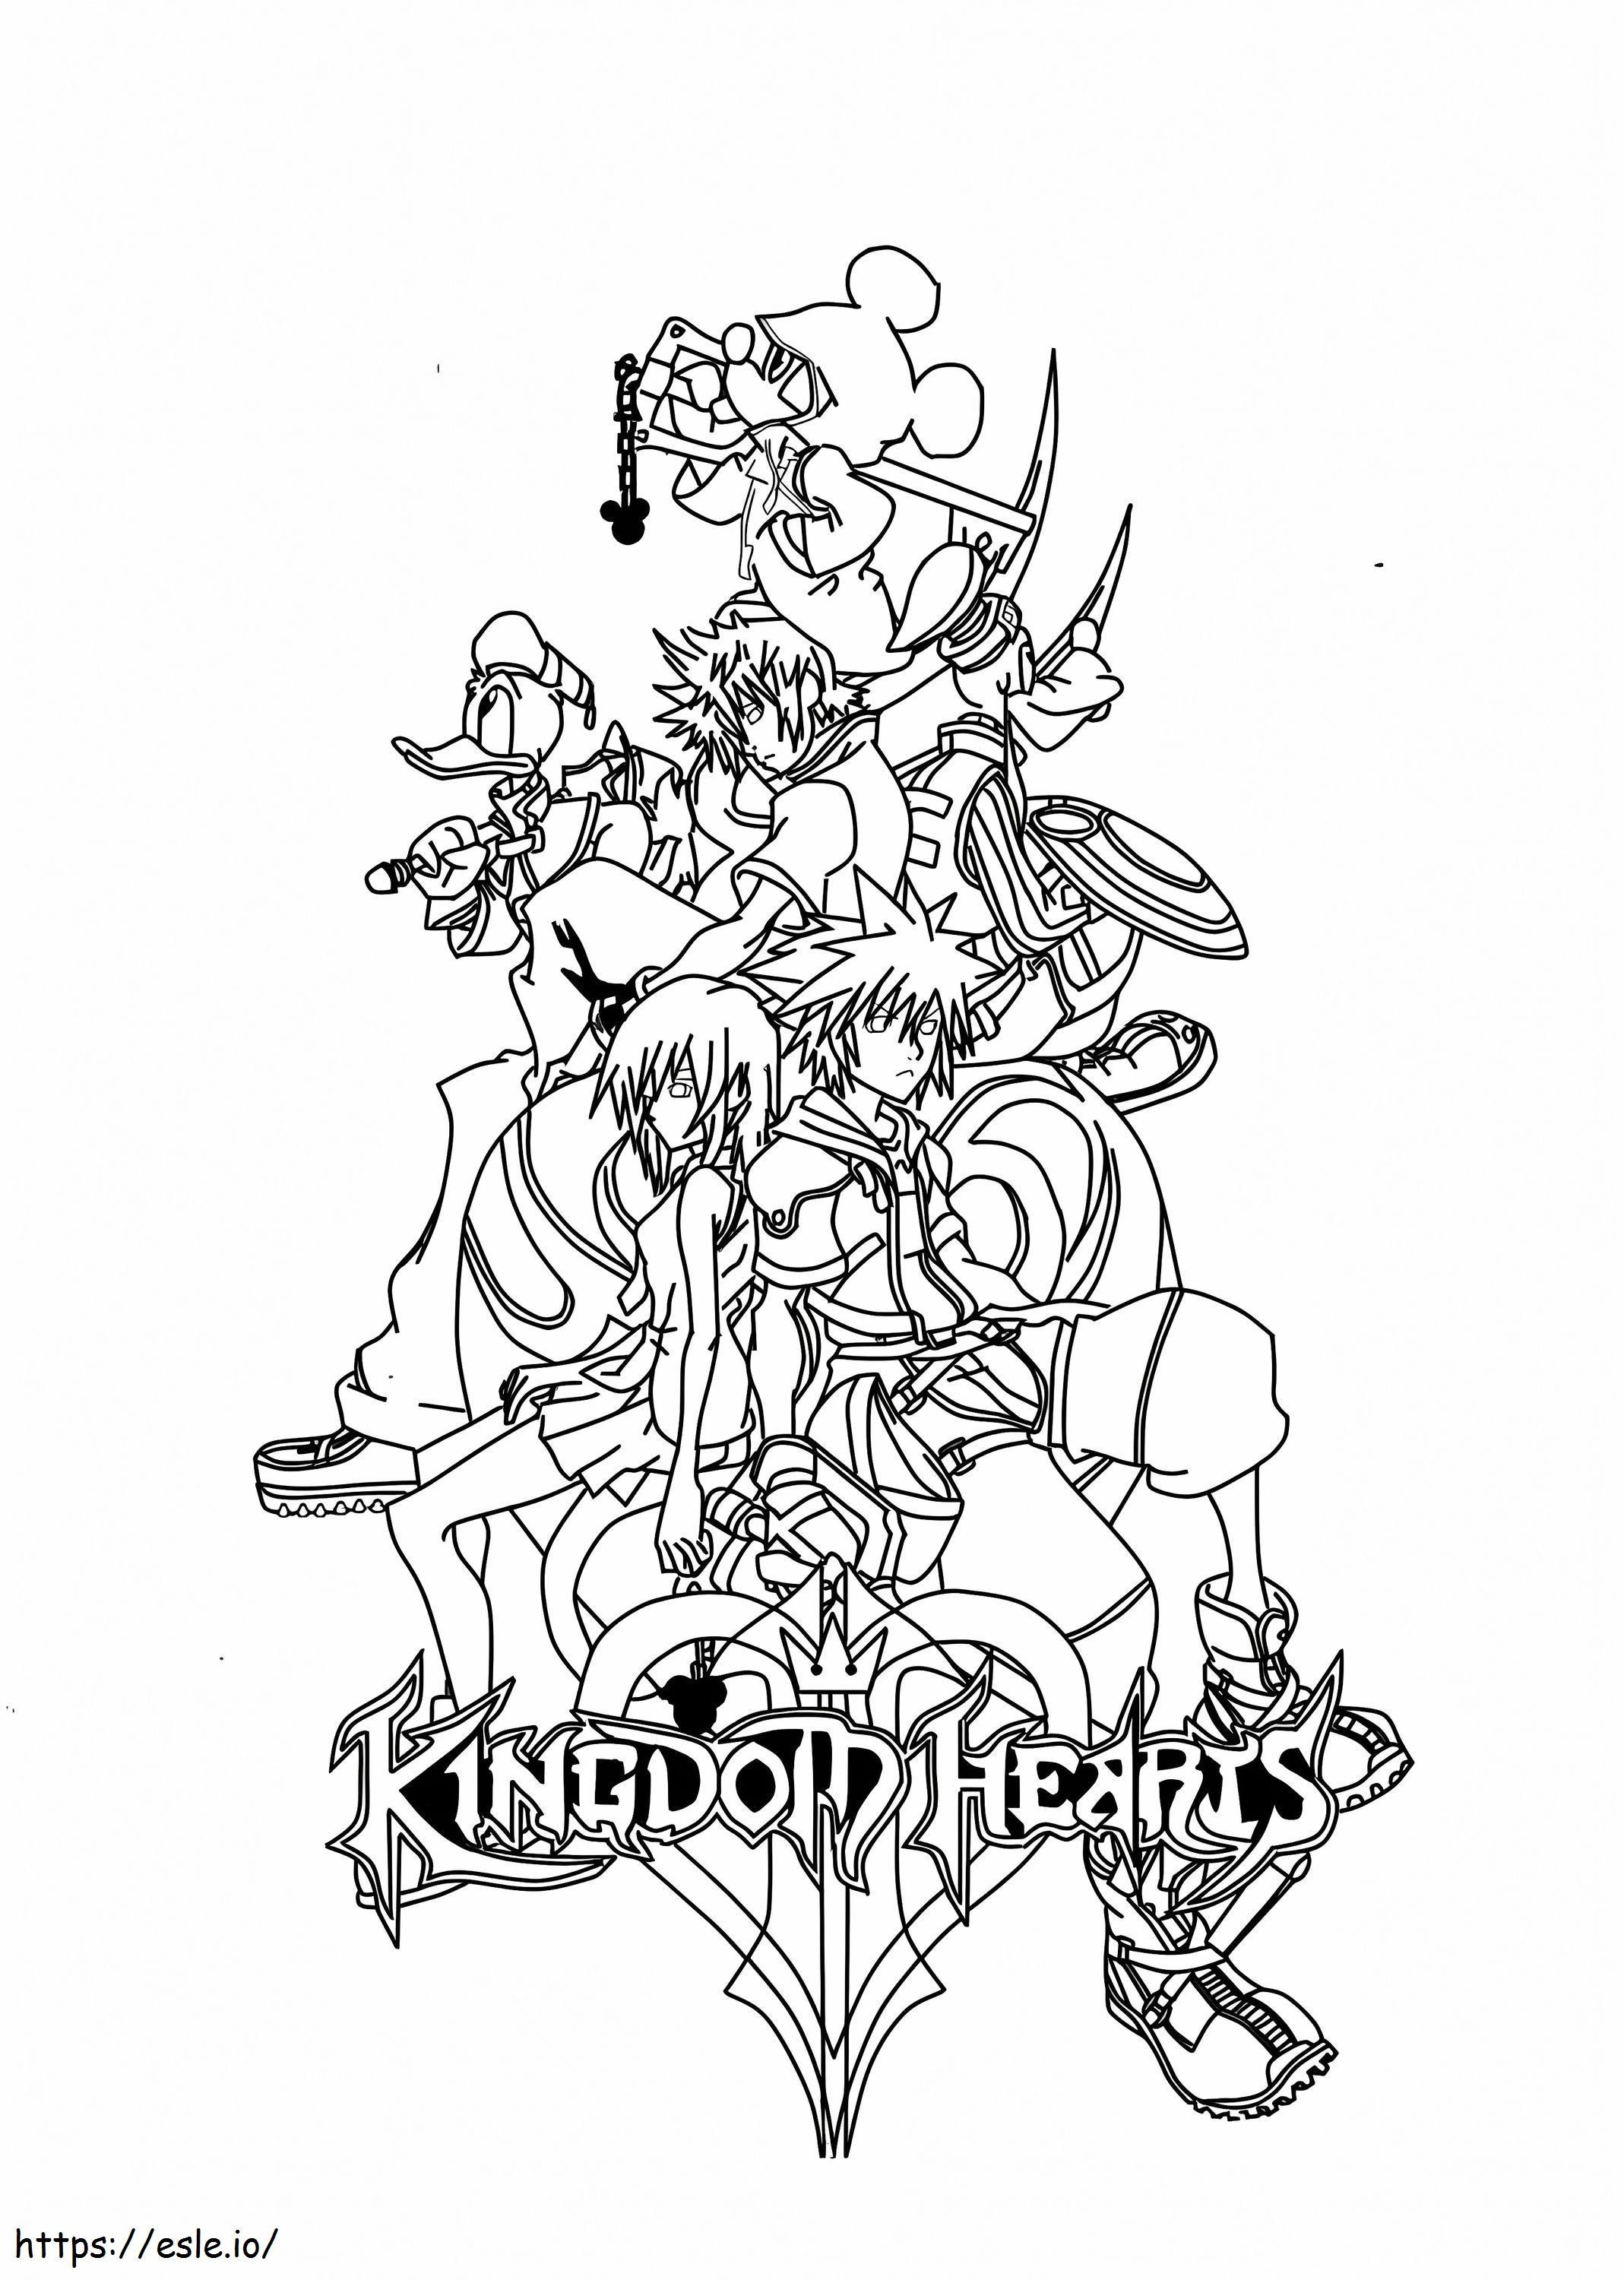 Personages uit Kingdom Hearts kleurplaat kleurplaat